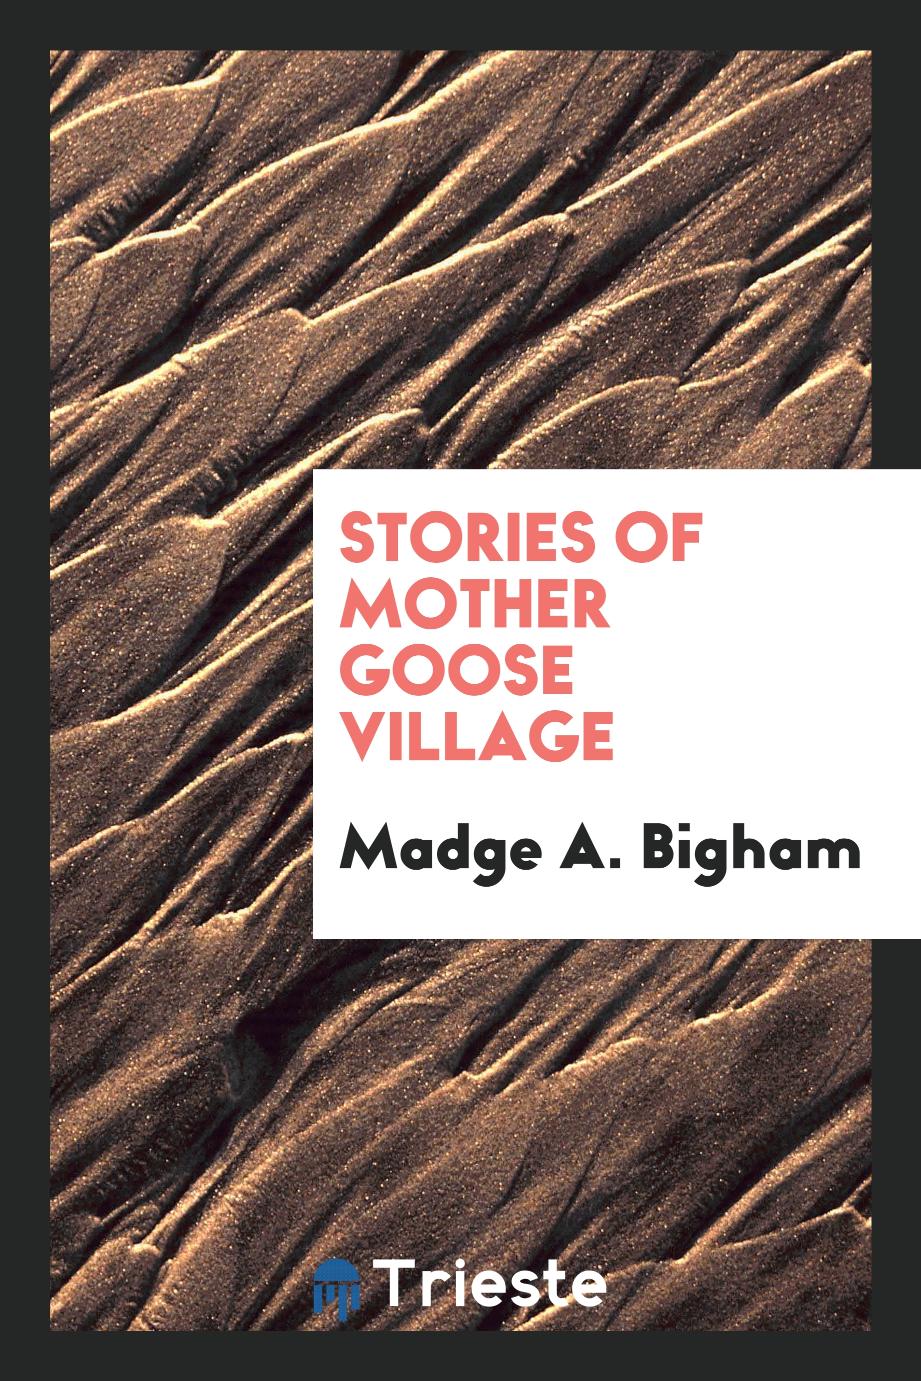 Stories of Mother Goose village